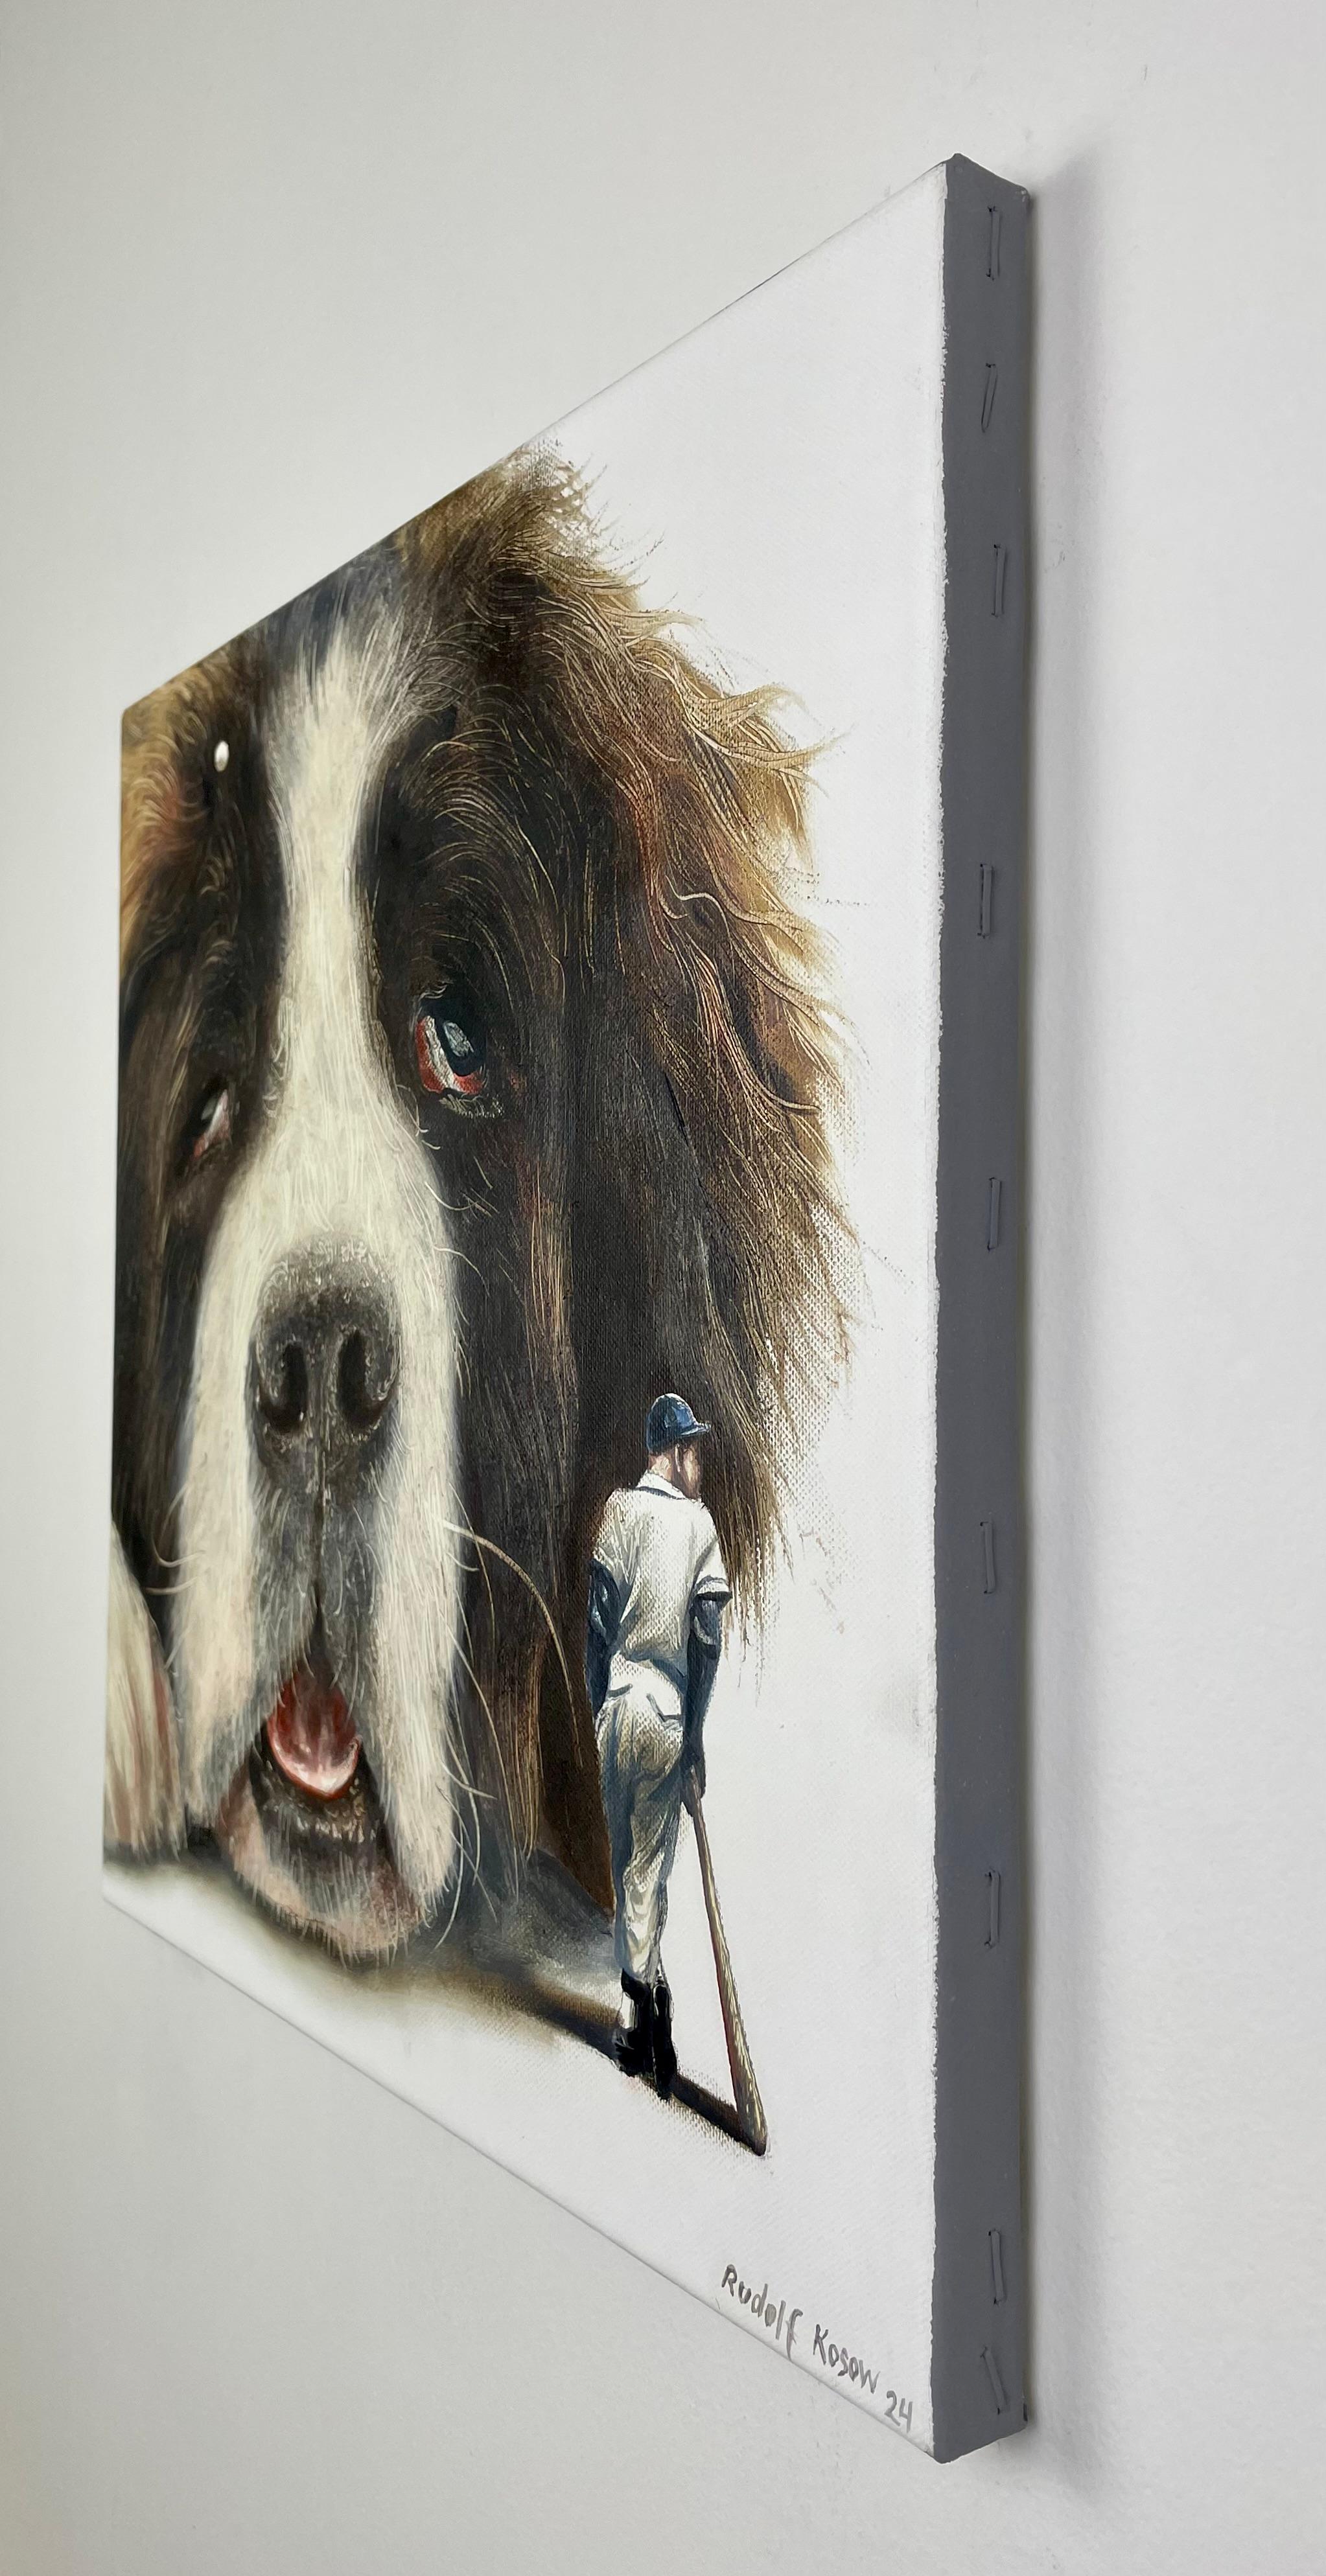 Lazybone (st-bernard, dog pet, baseball, vintage, animal, surrealist painting) For Sale 3